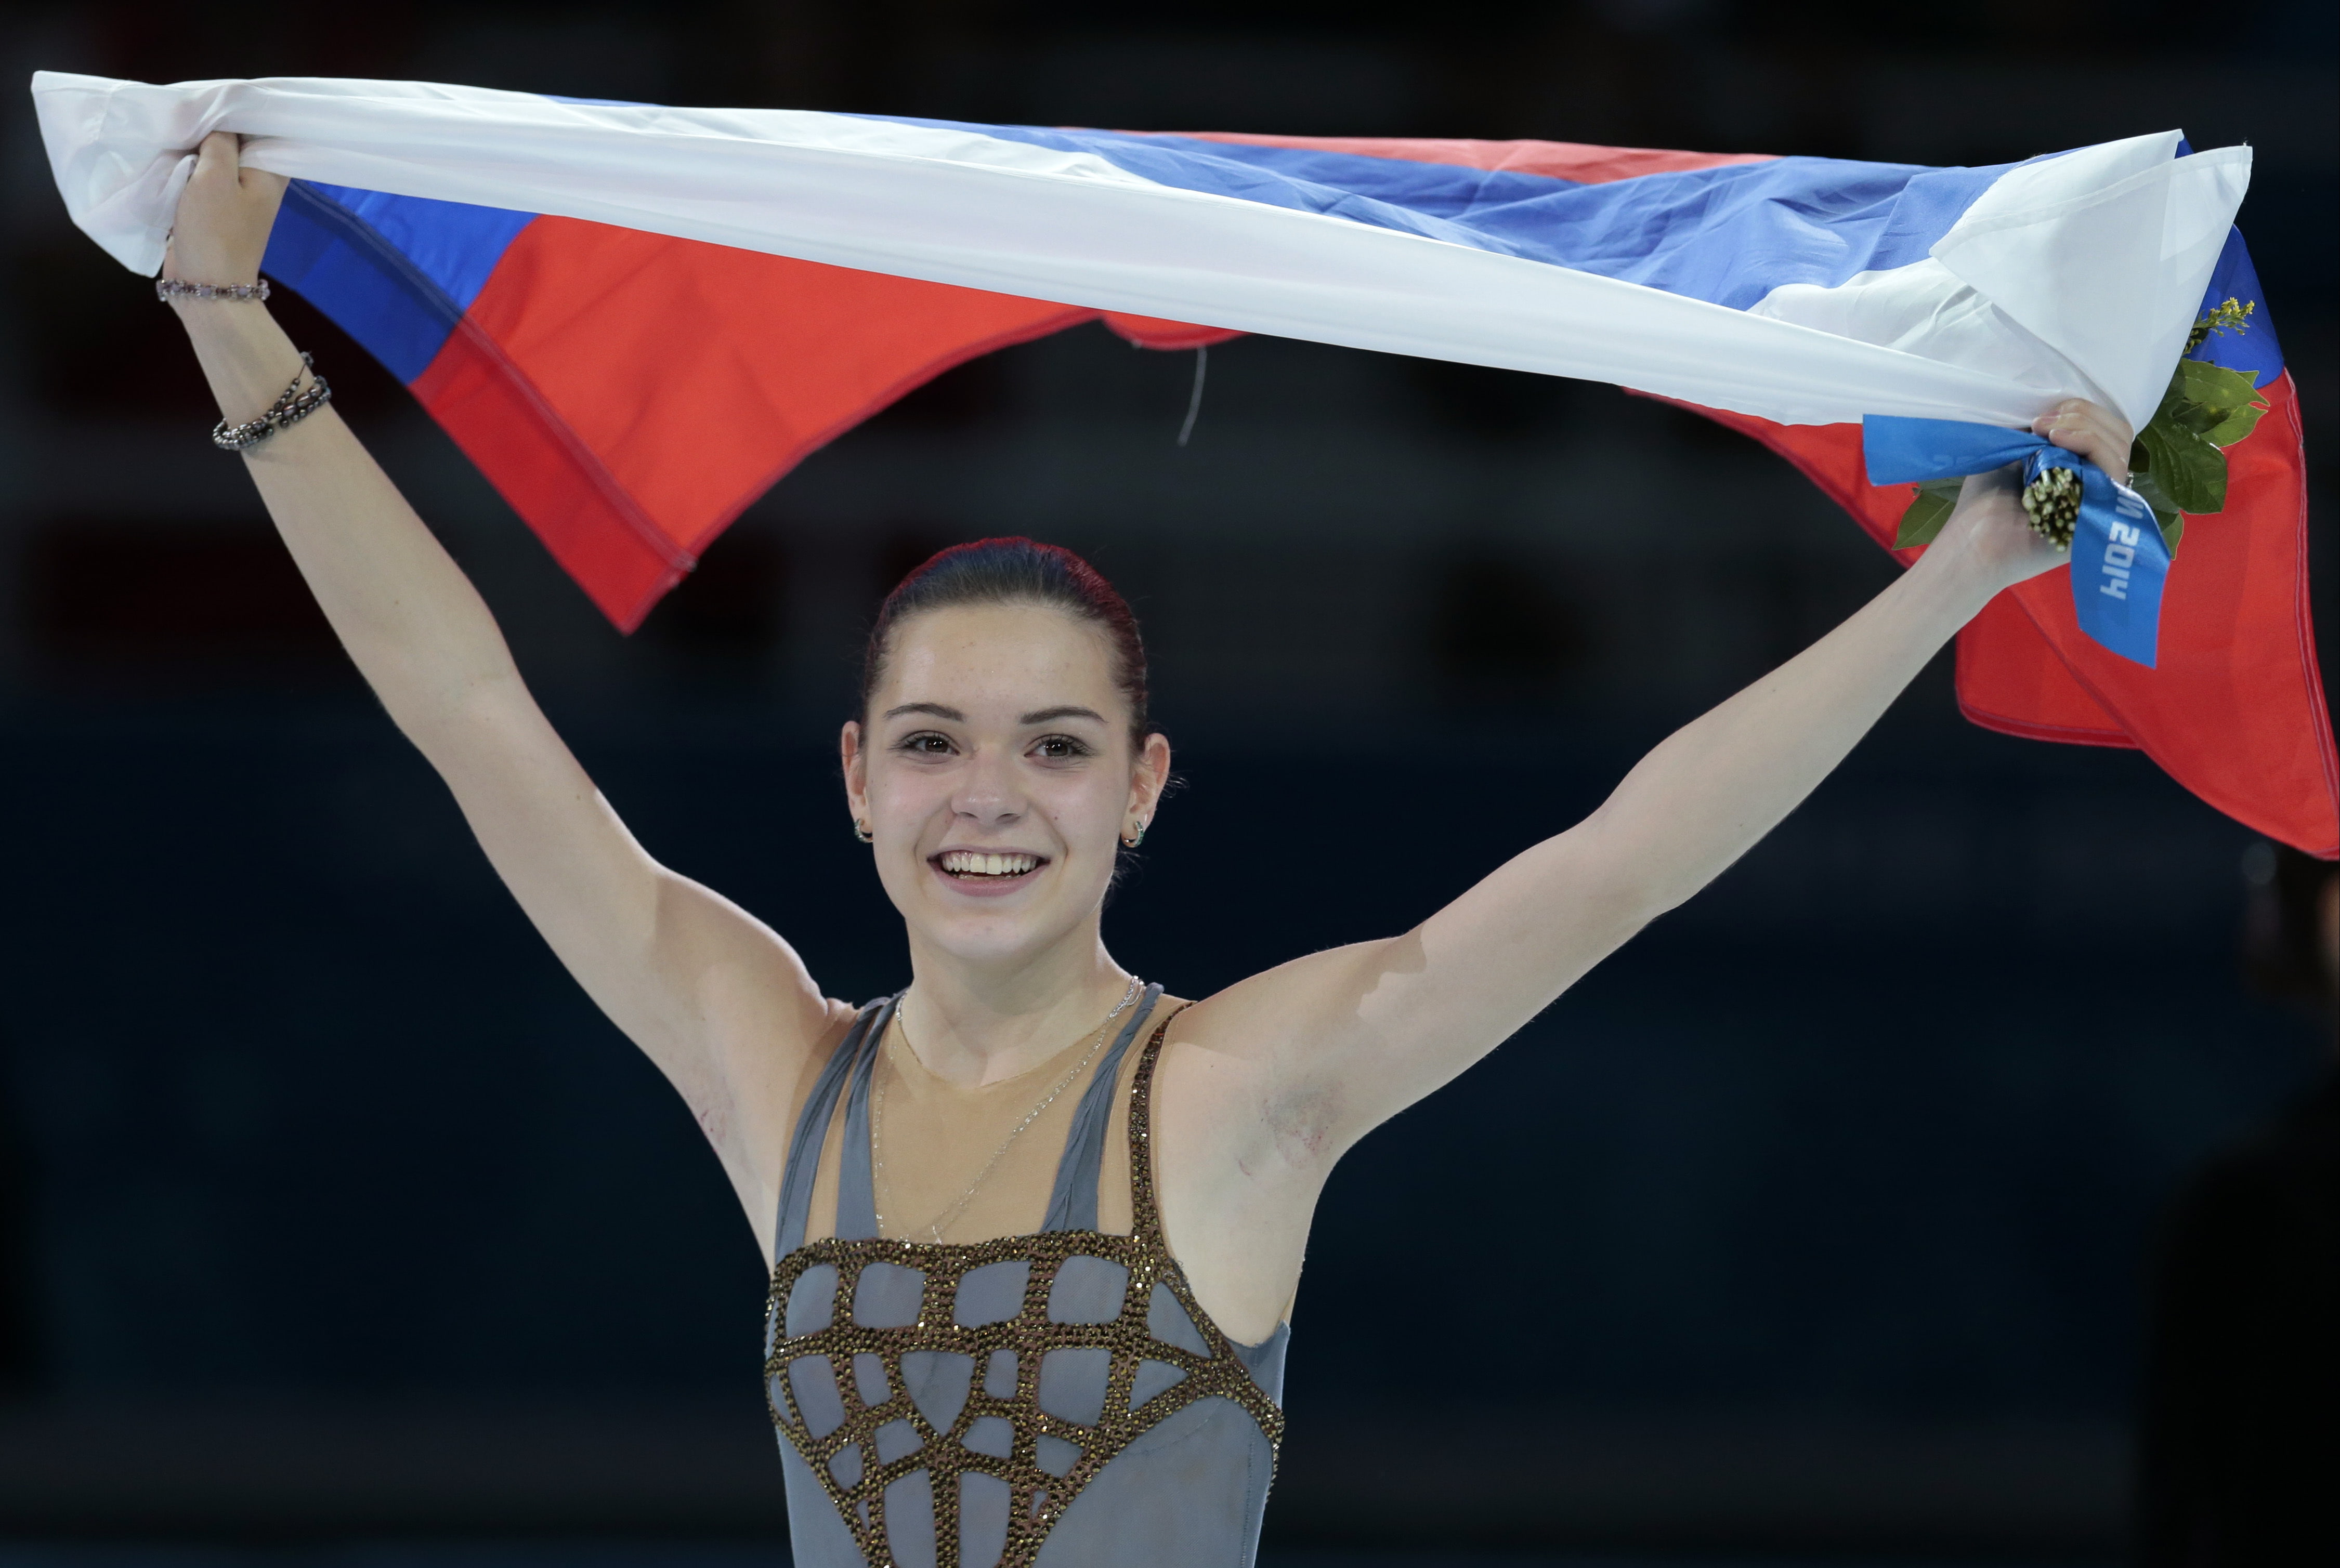 joy, gold, flag, figure skating, RUSSIA, Sochi 2014, The XXII Winter Olympic Games